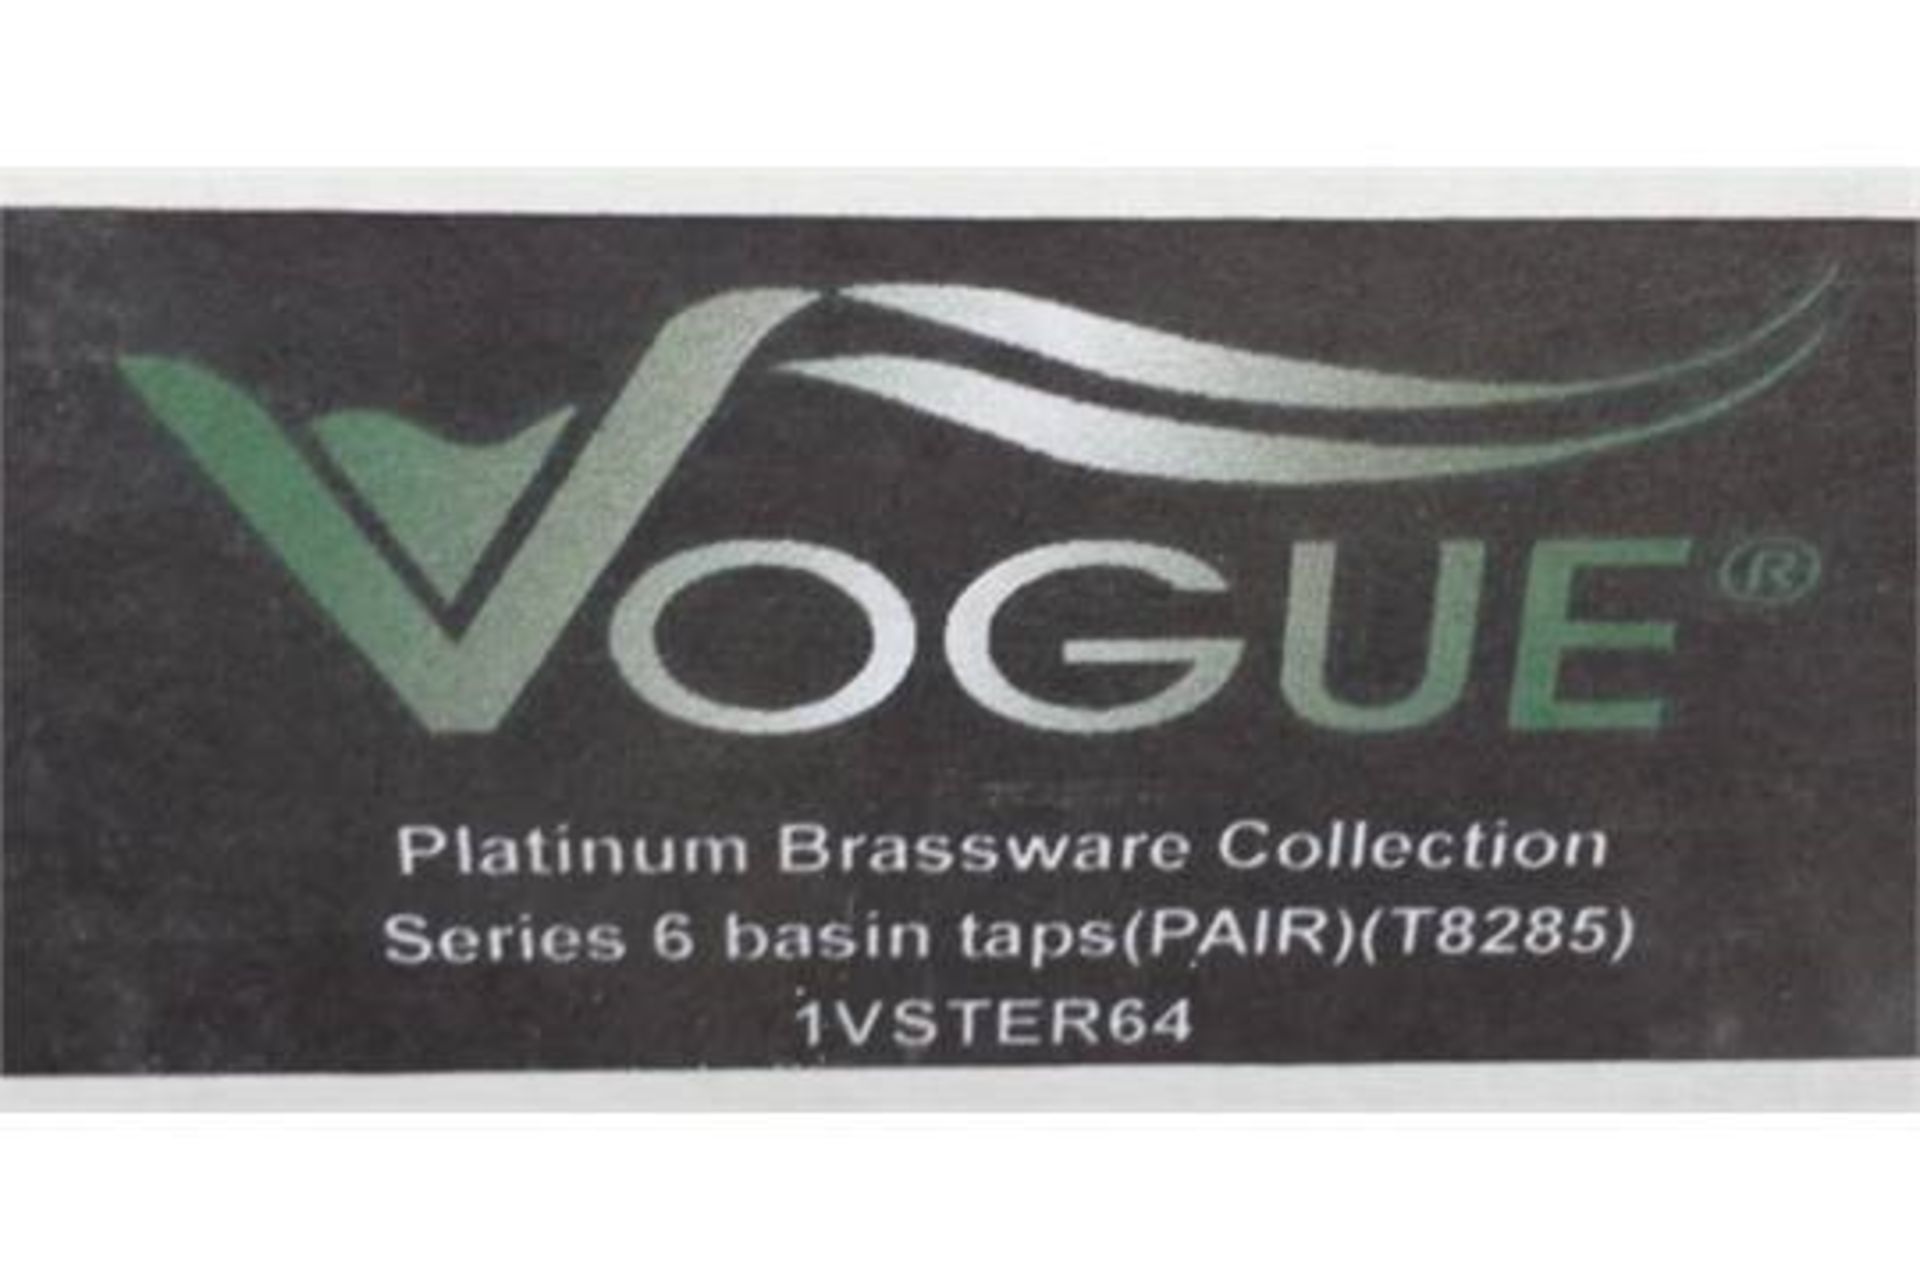 1 x Vogue Series 6 Crosshead Basin Taps - Vogue Bathrooms Platinum Brassware Collection - - Image 2 of 4